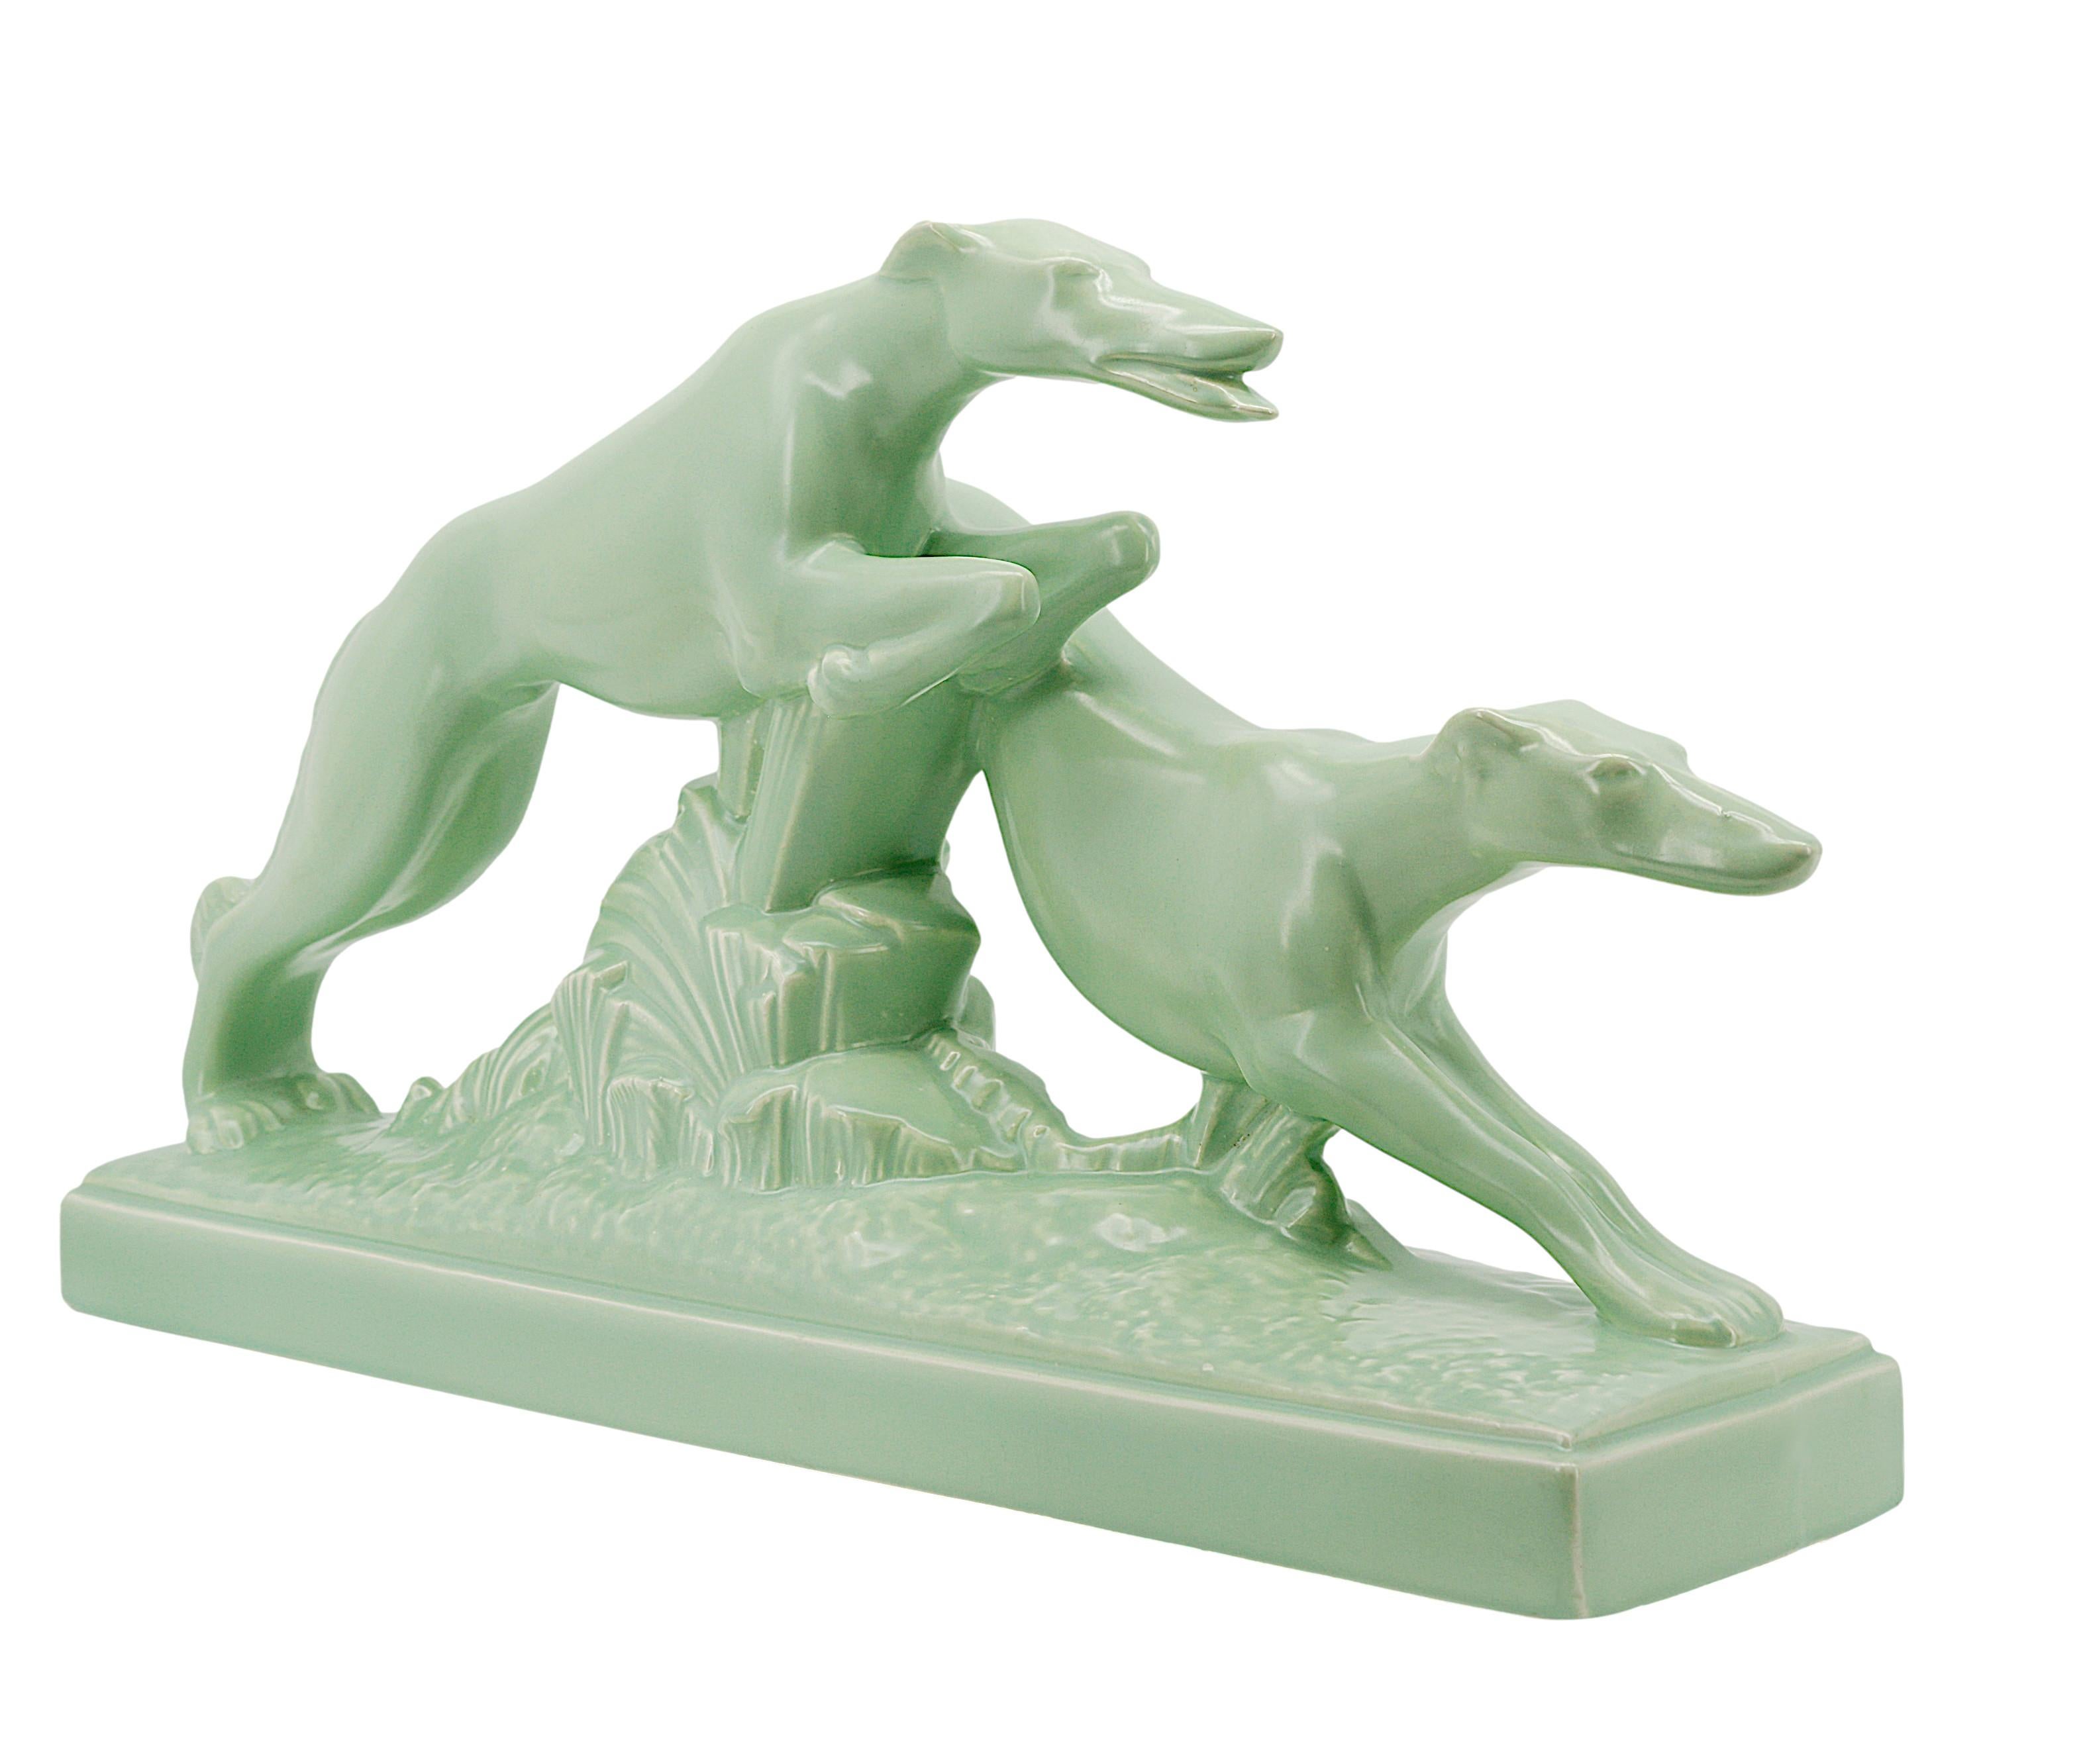 French Art Deco greyhound couple sculpture by Charles LEMANCEAU at Sainte-Radegonde, France, 1930. Greyhound race. Width: 20.5